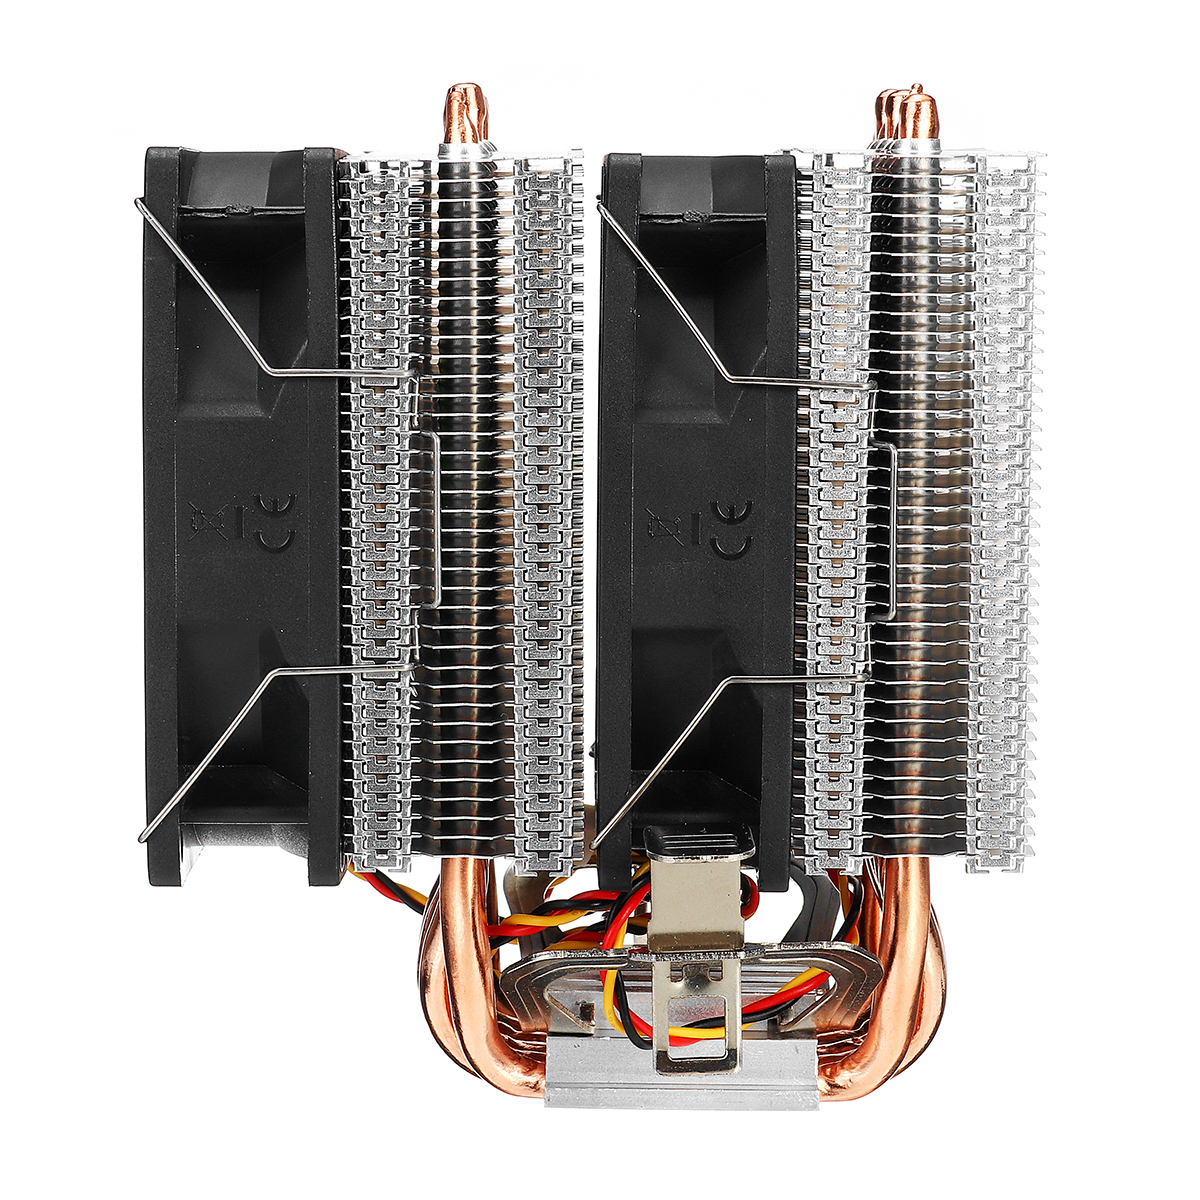 Aurora 3 Pin Double Fan 6 Copper Tube Dual Tower CPU Cooling Fan Cooler Heatsink for Intel AMD 5